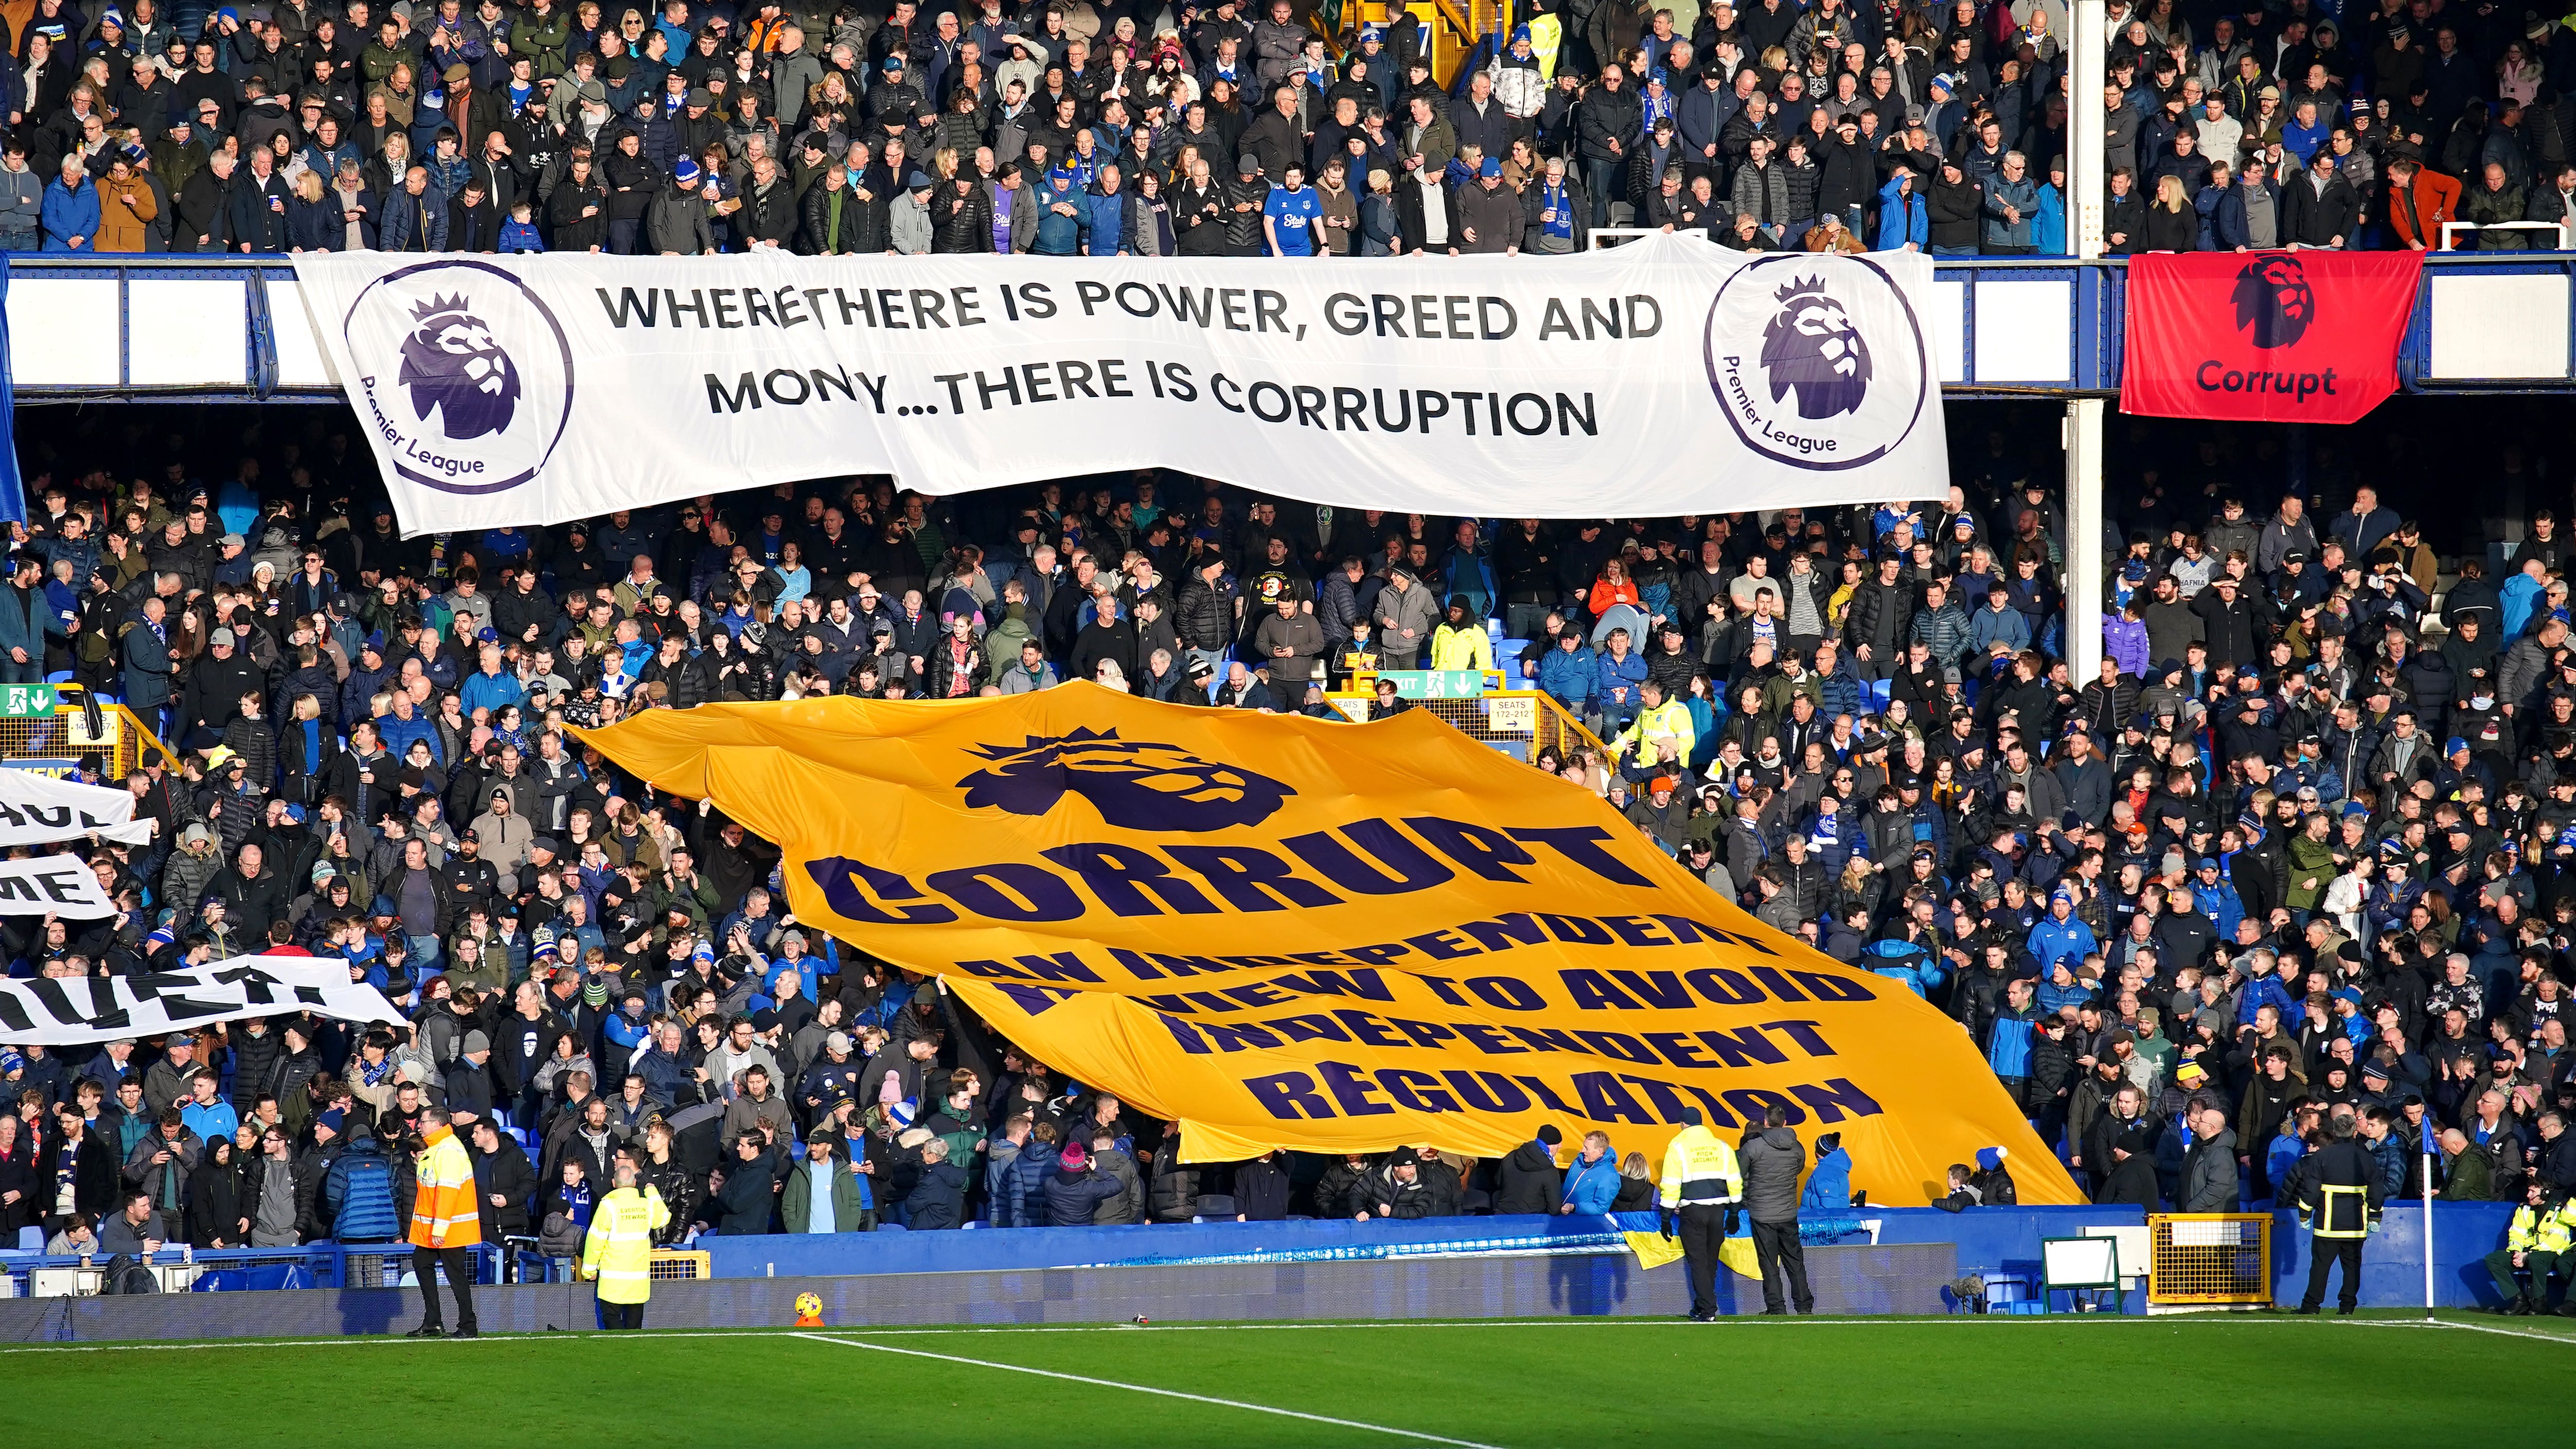 Everton fan representative says Premier League risks losing trust of supporters